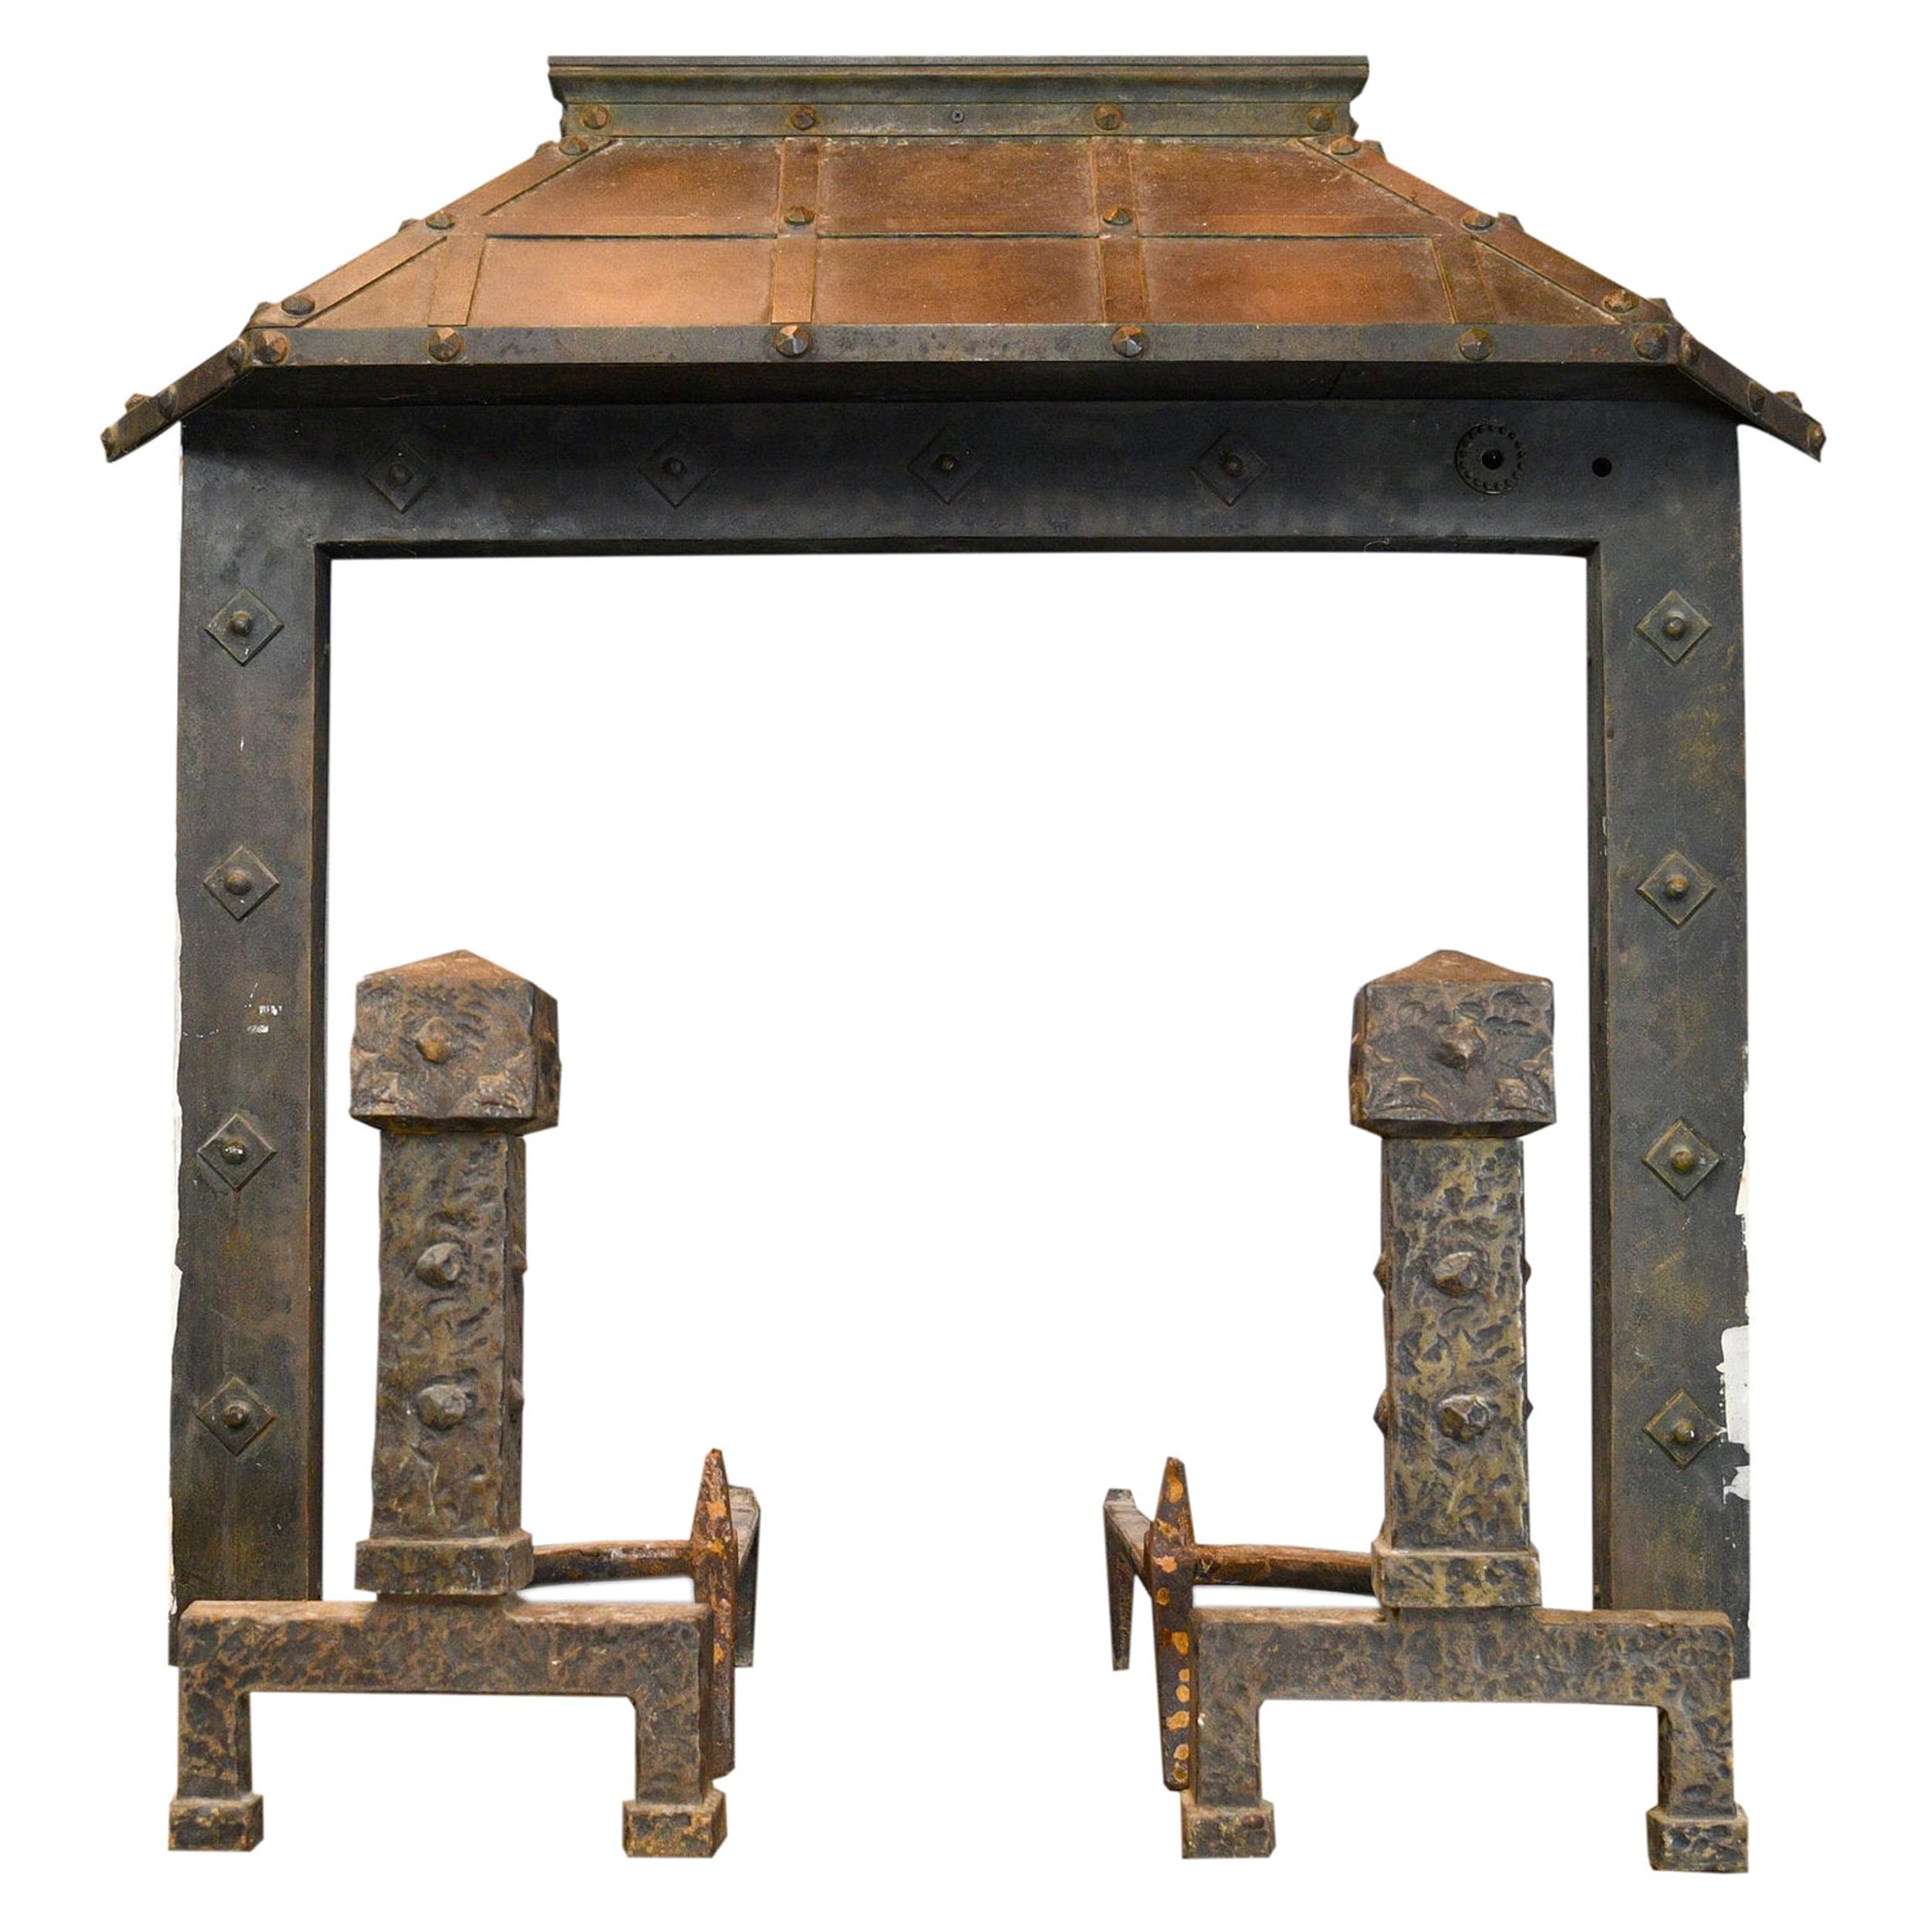 Hammered Iron Fireplace Set